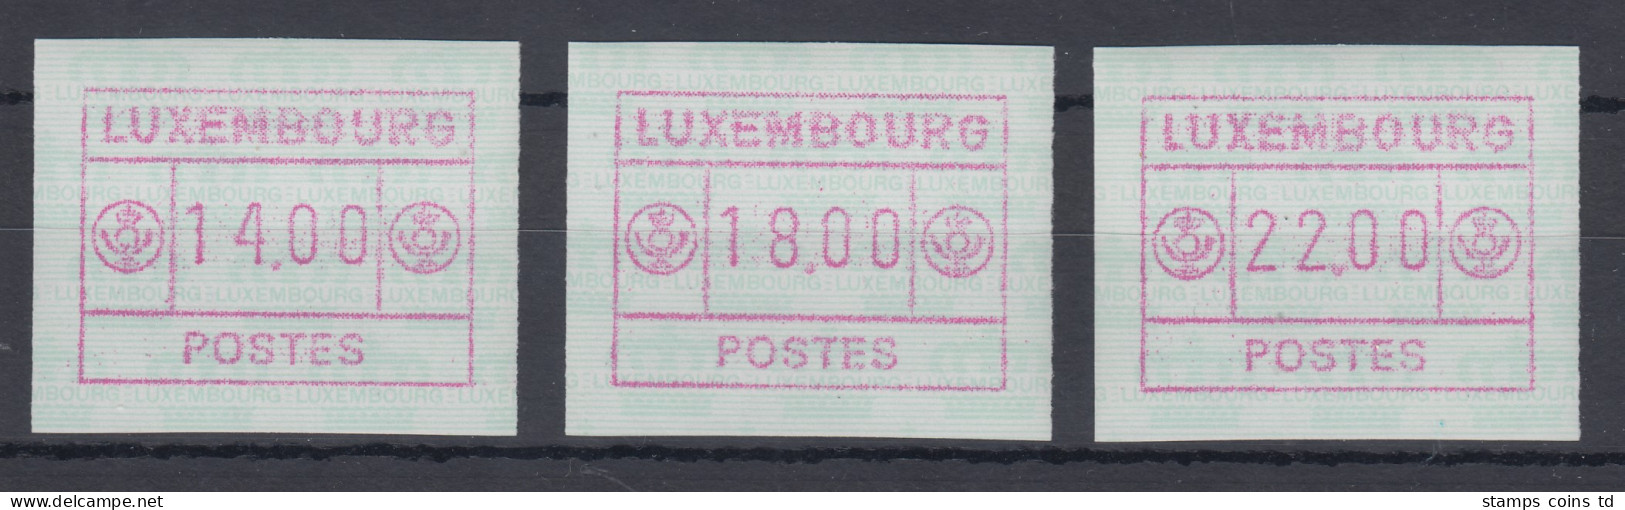 Luxemburg ATM Kleines POSTES Mi.-Nr. 2 Satz 14-18-22 Farbe Rotlila ** - Vignettes D'affranchissement